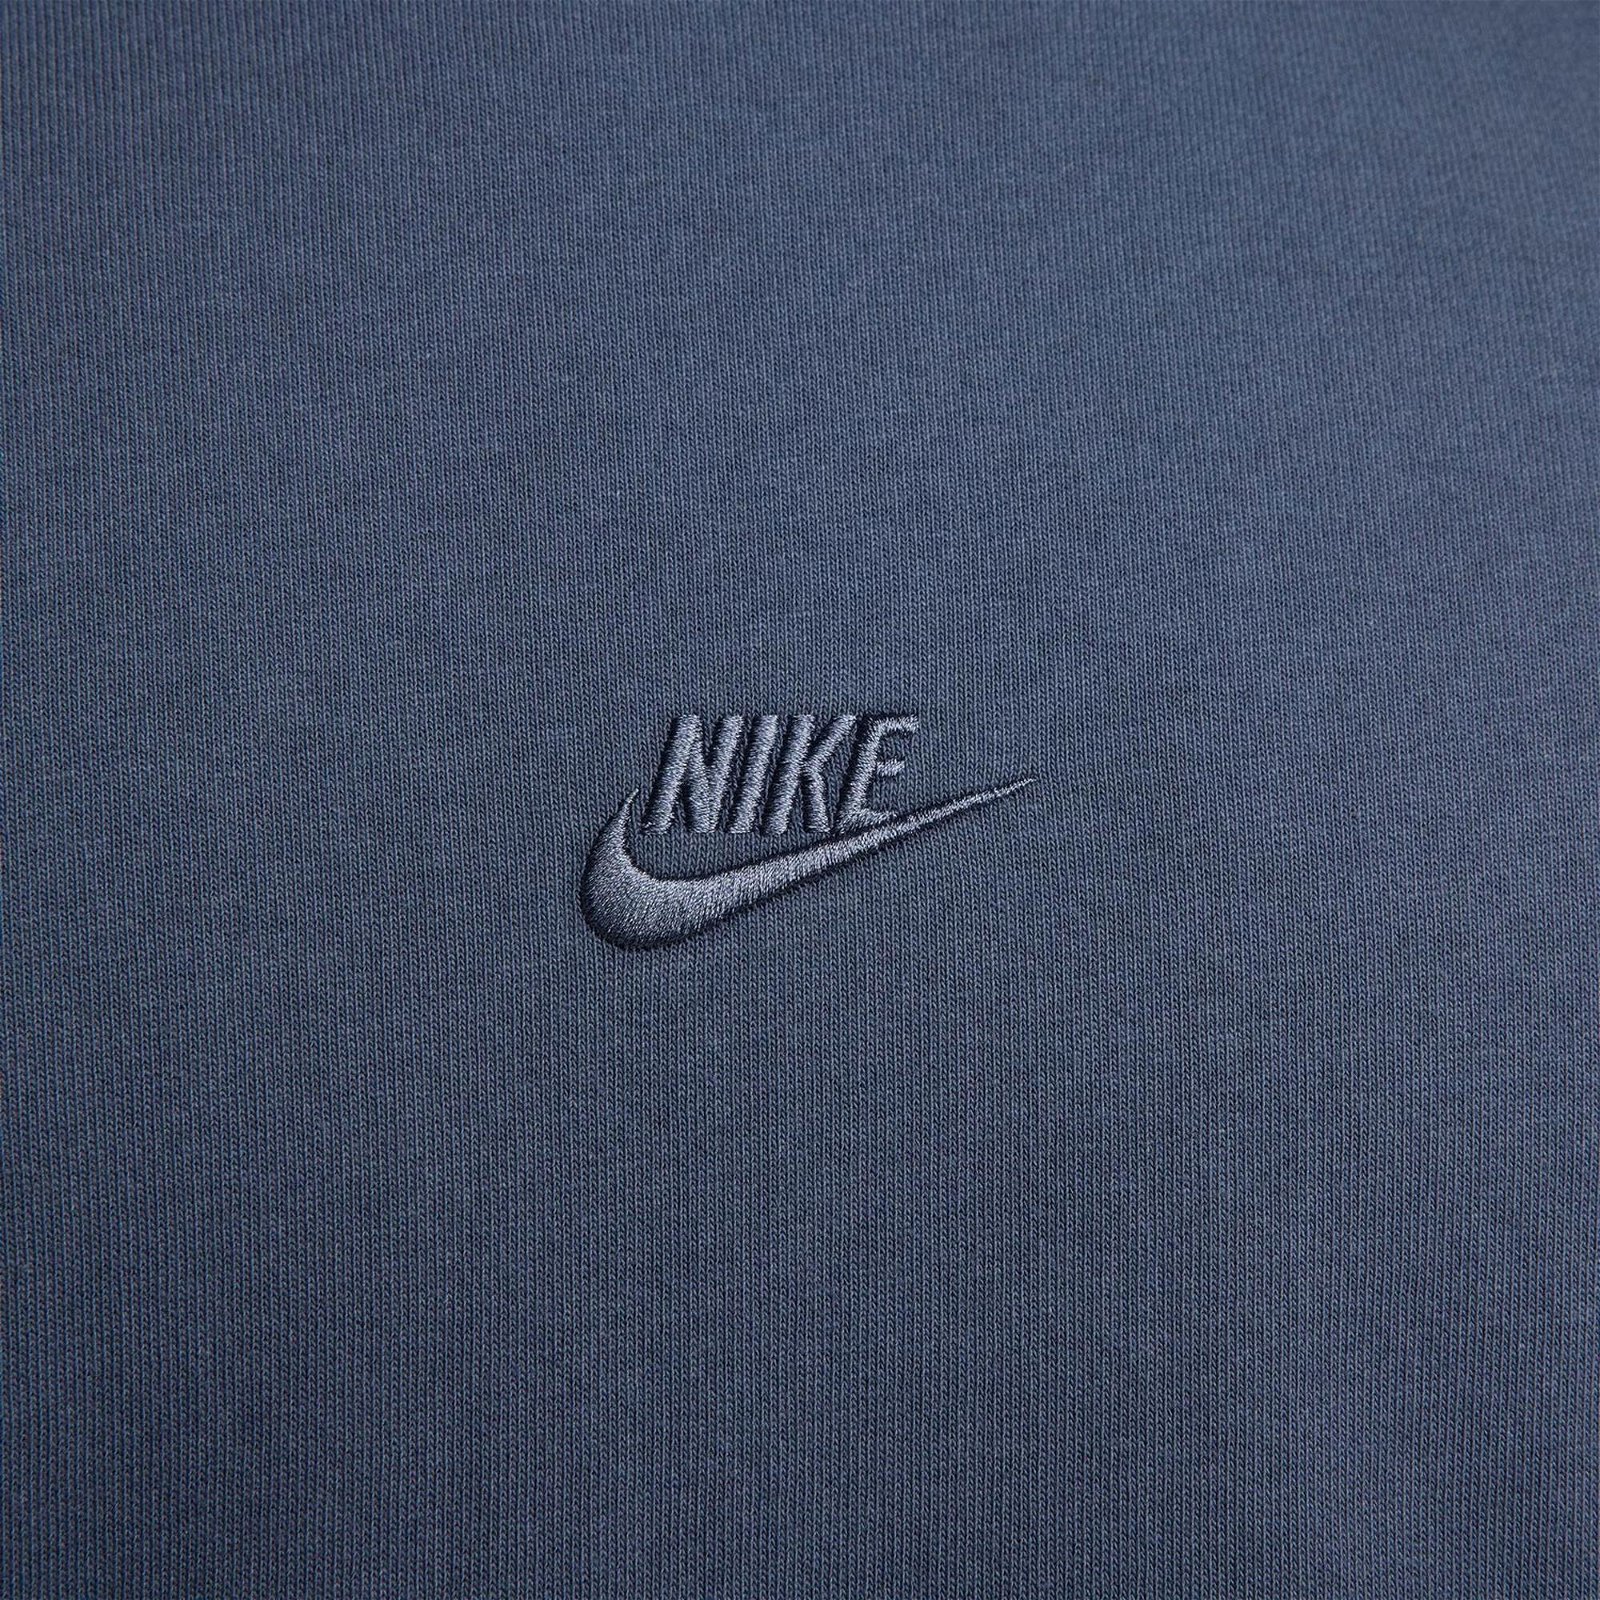 Nike Sportswear Premium Essentials Erkek Mavi T-Shirt